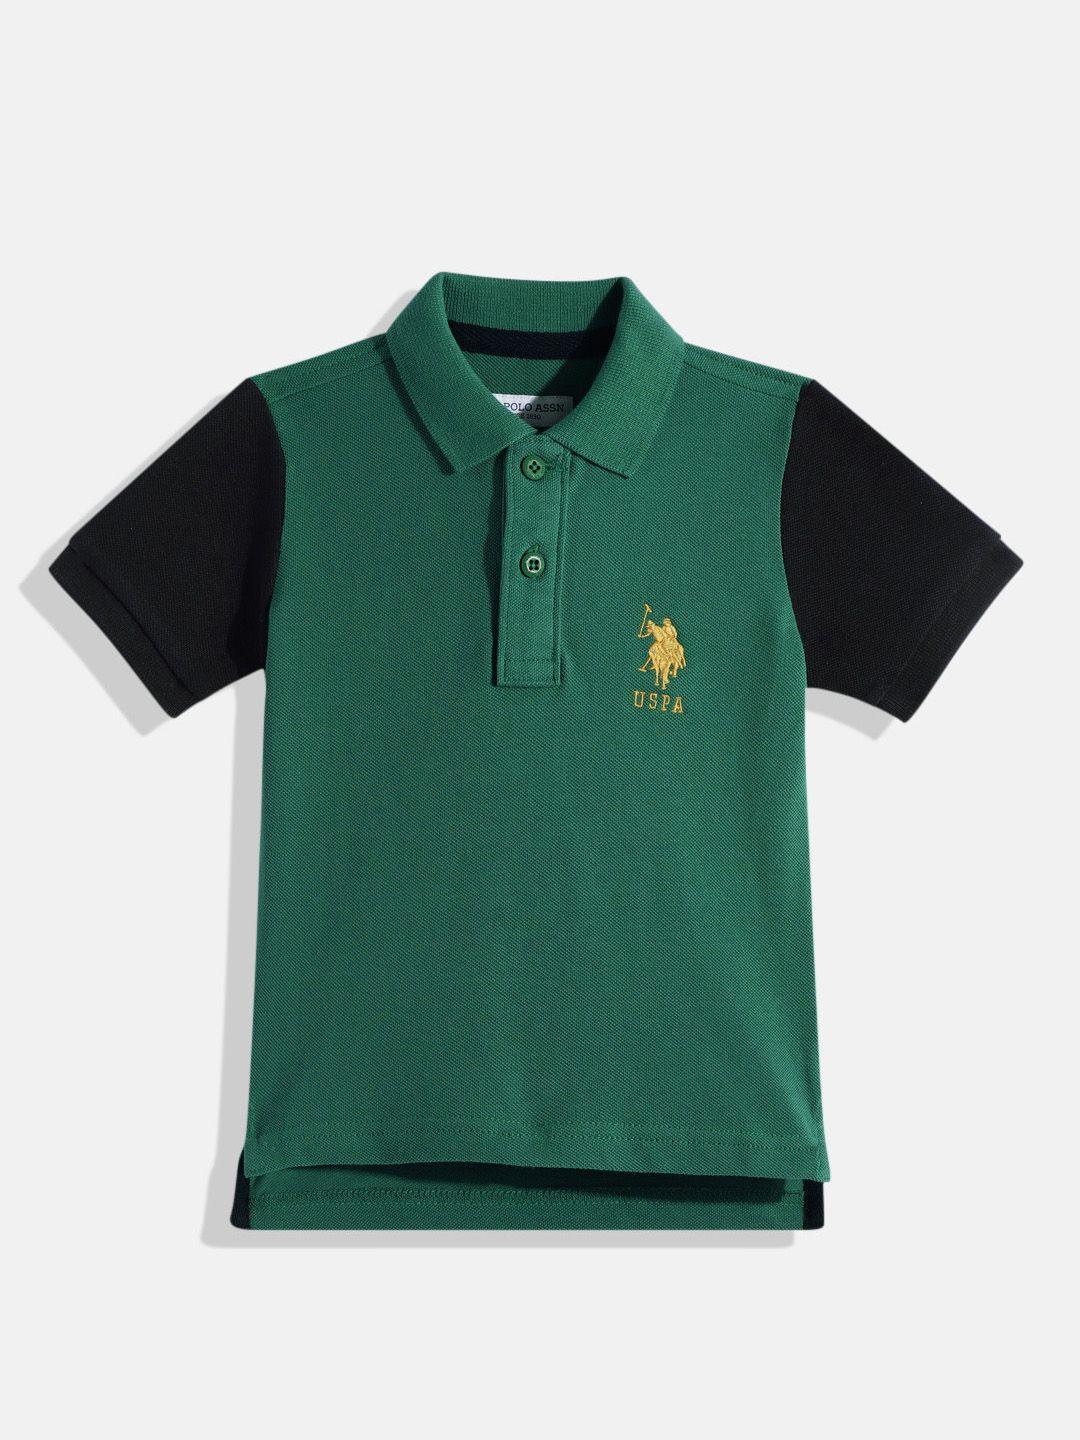 u.s. polo assn. kids boys colourblocked pure cotton t-shirt